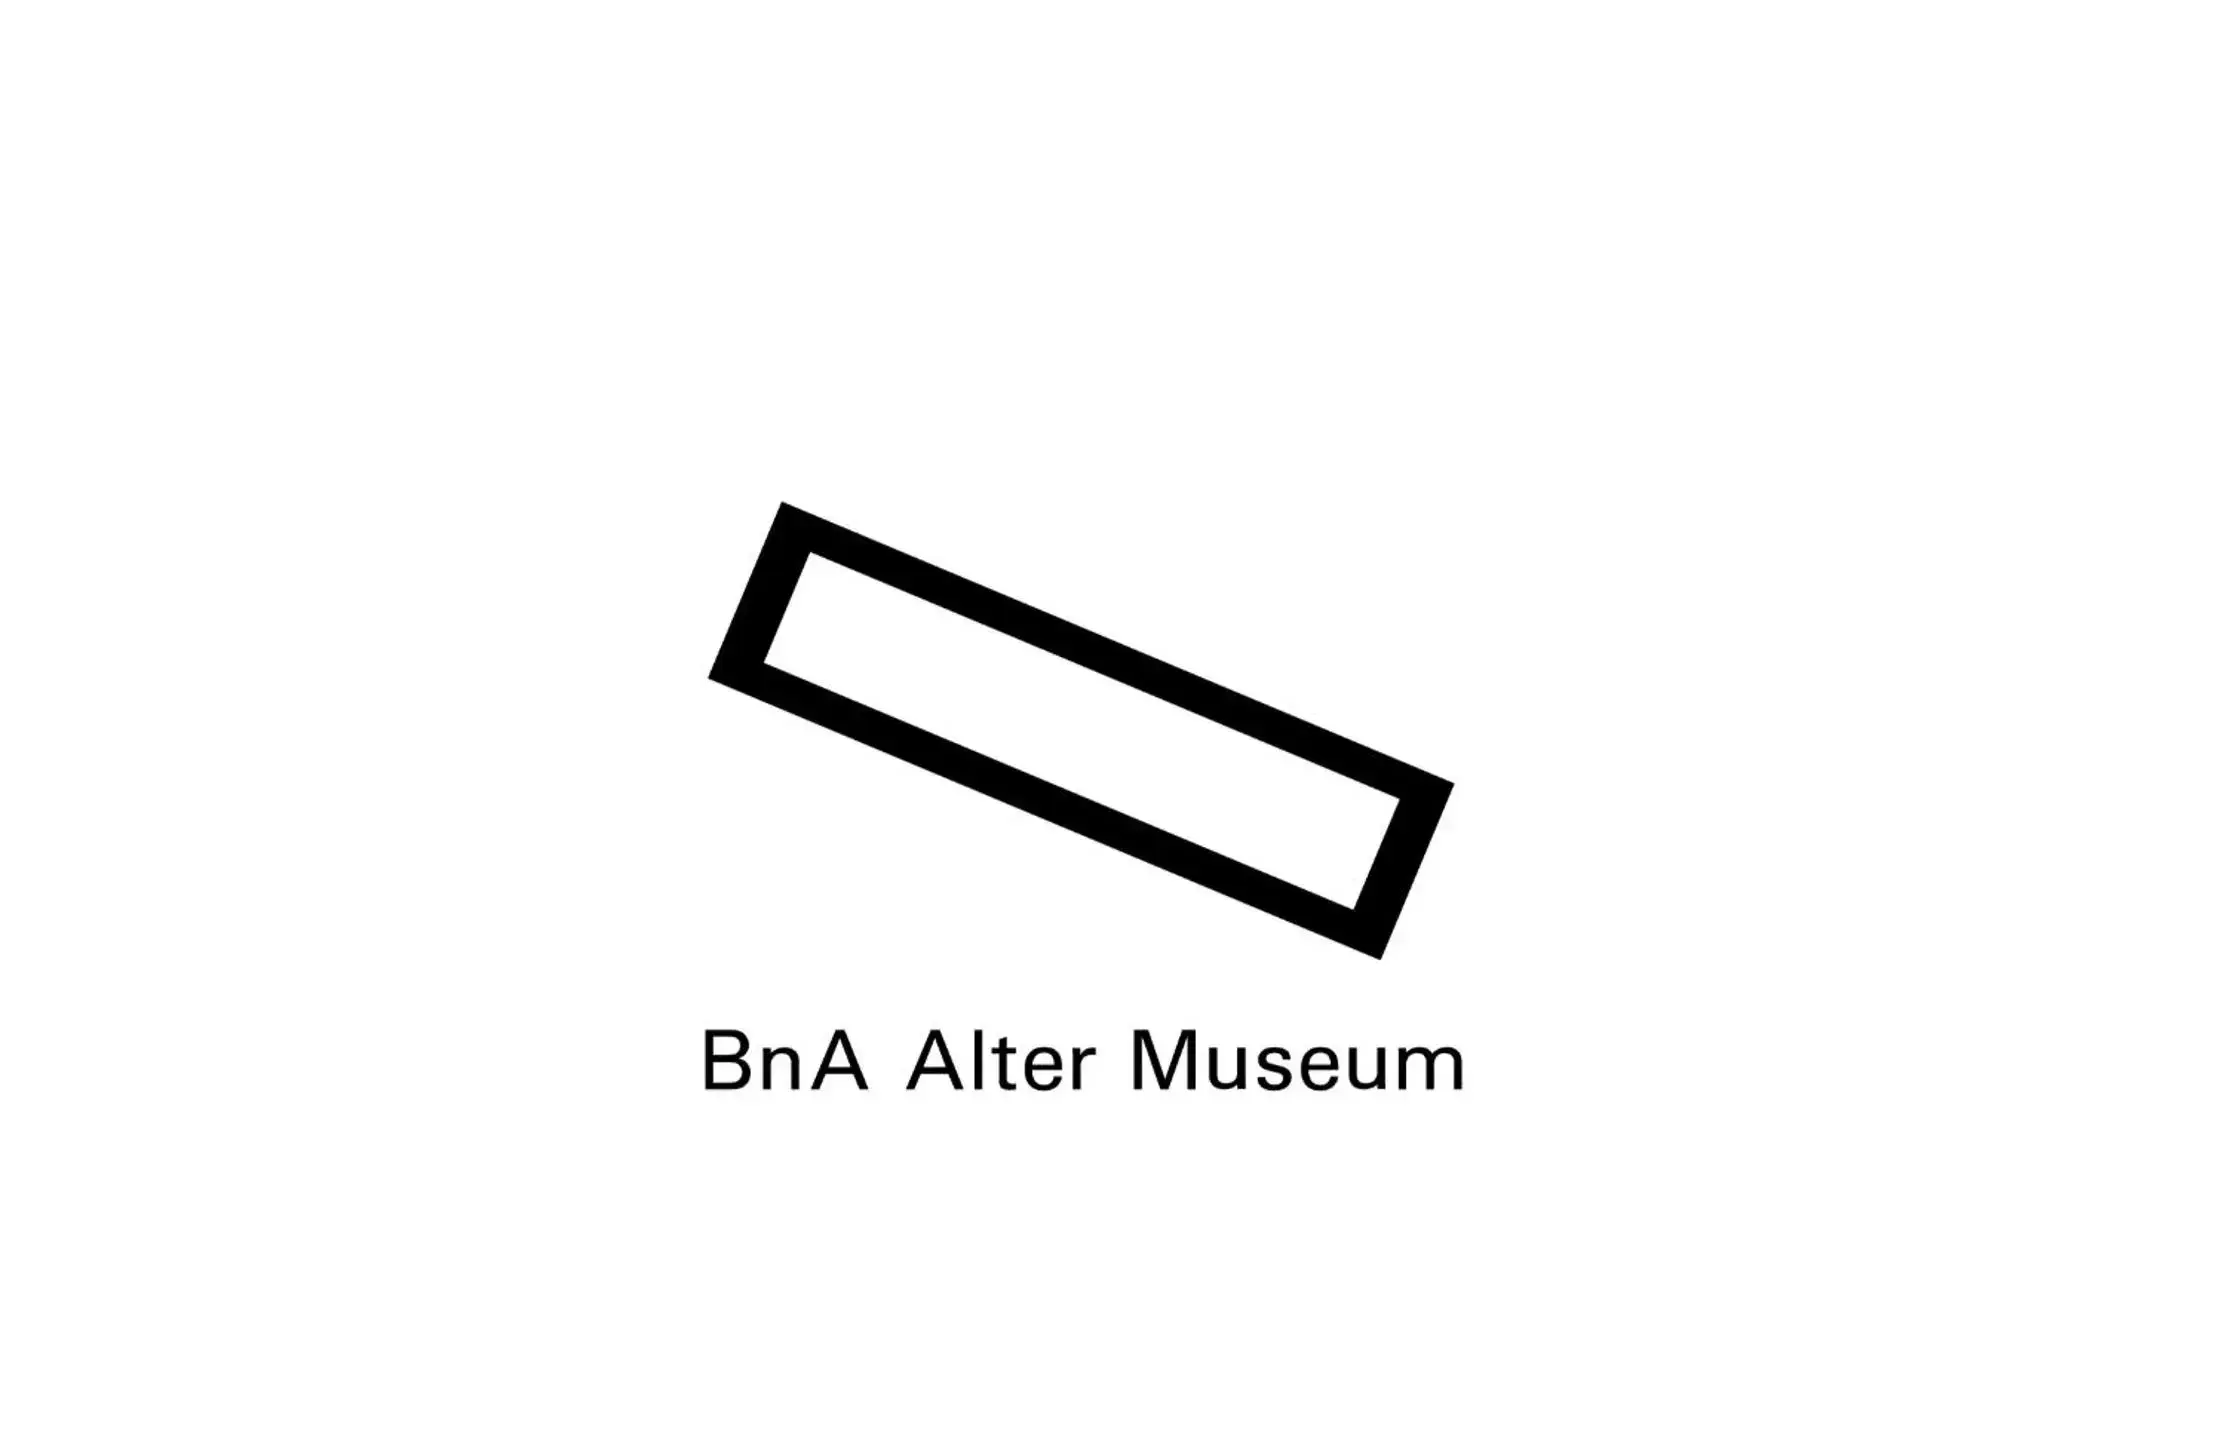 Property logo or sign, Property Logo/Sign in BnA Alter Museum